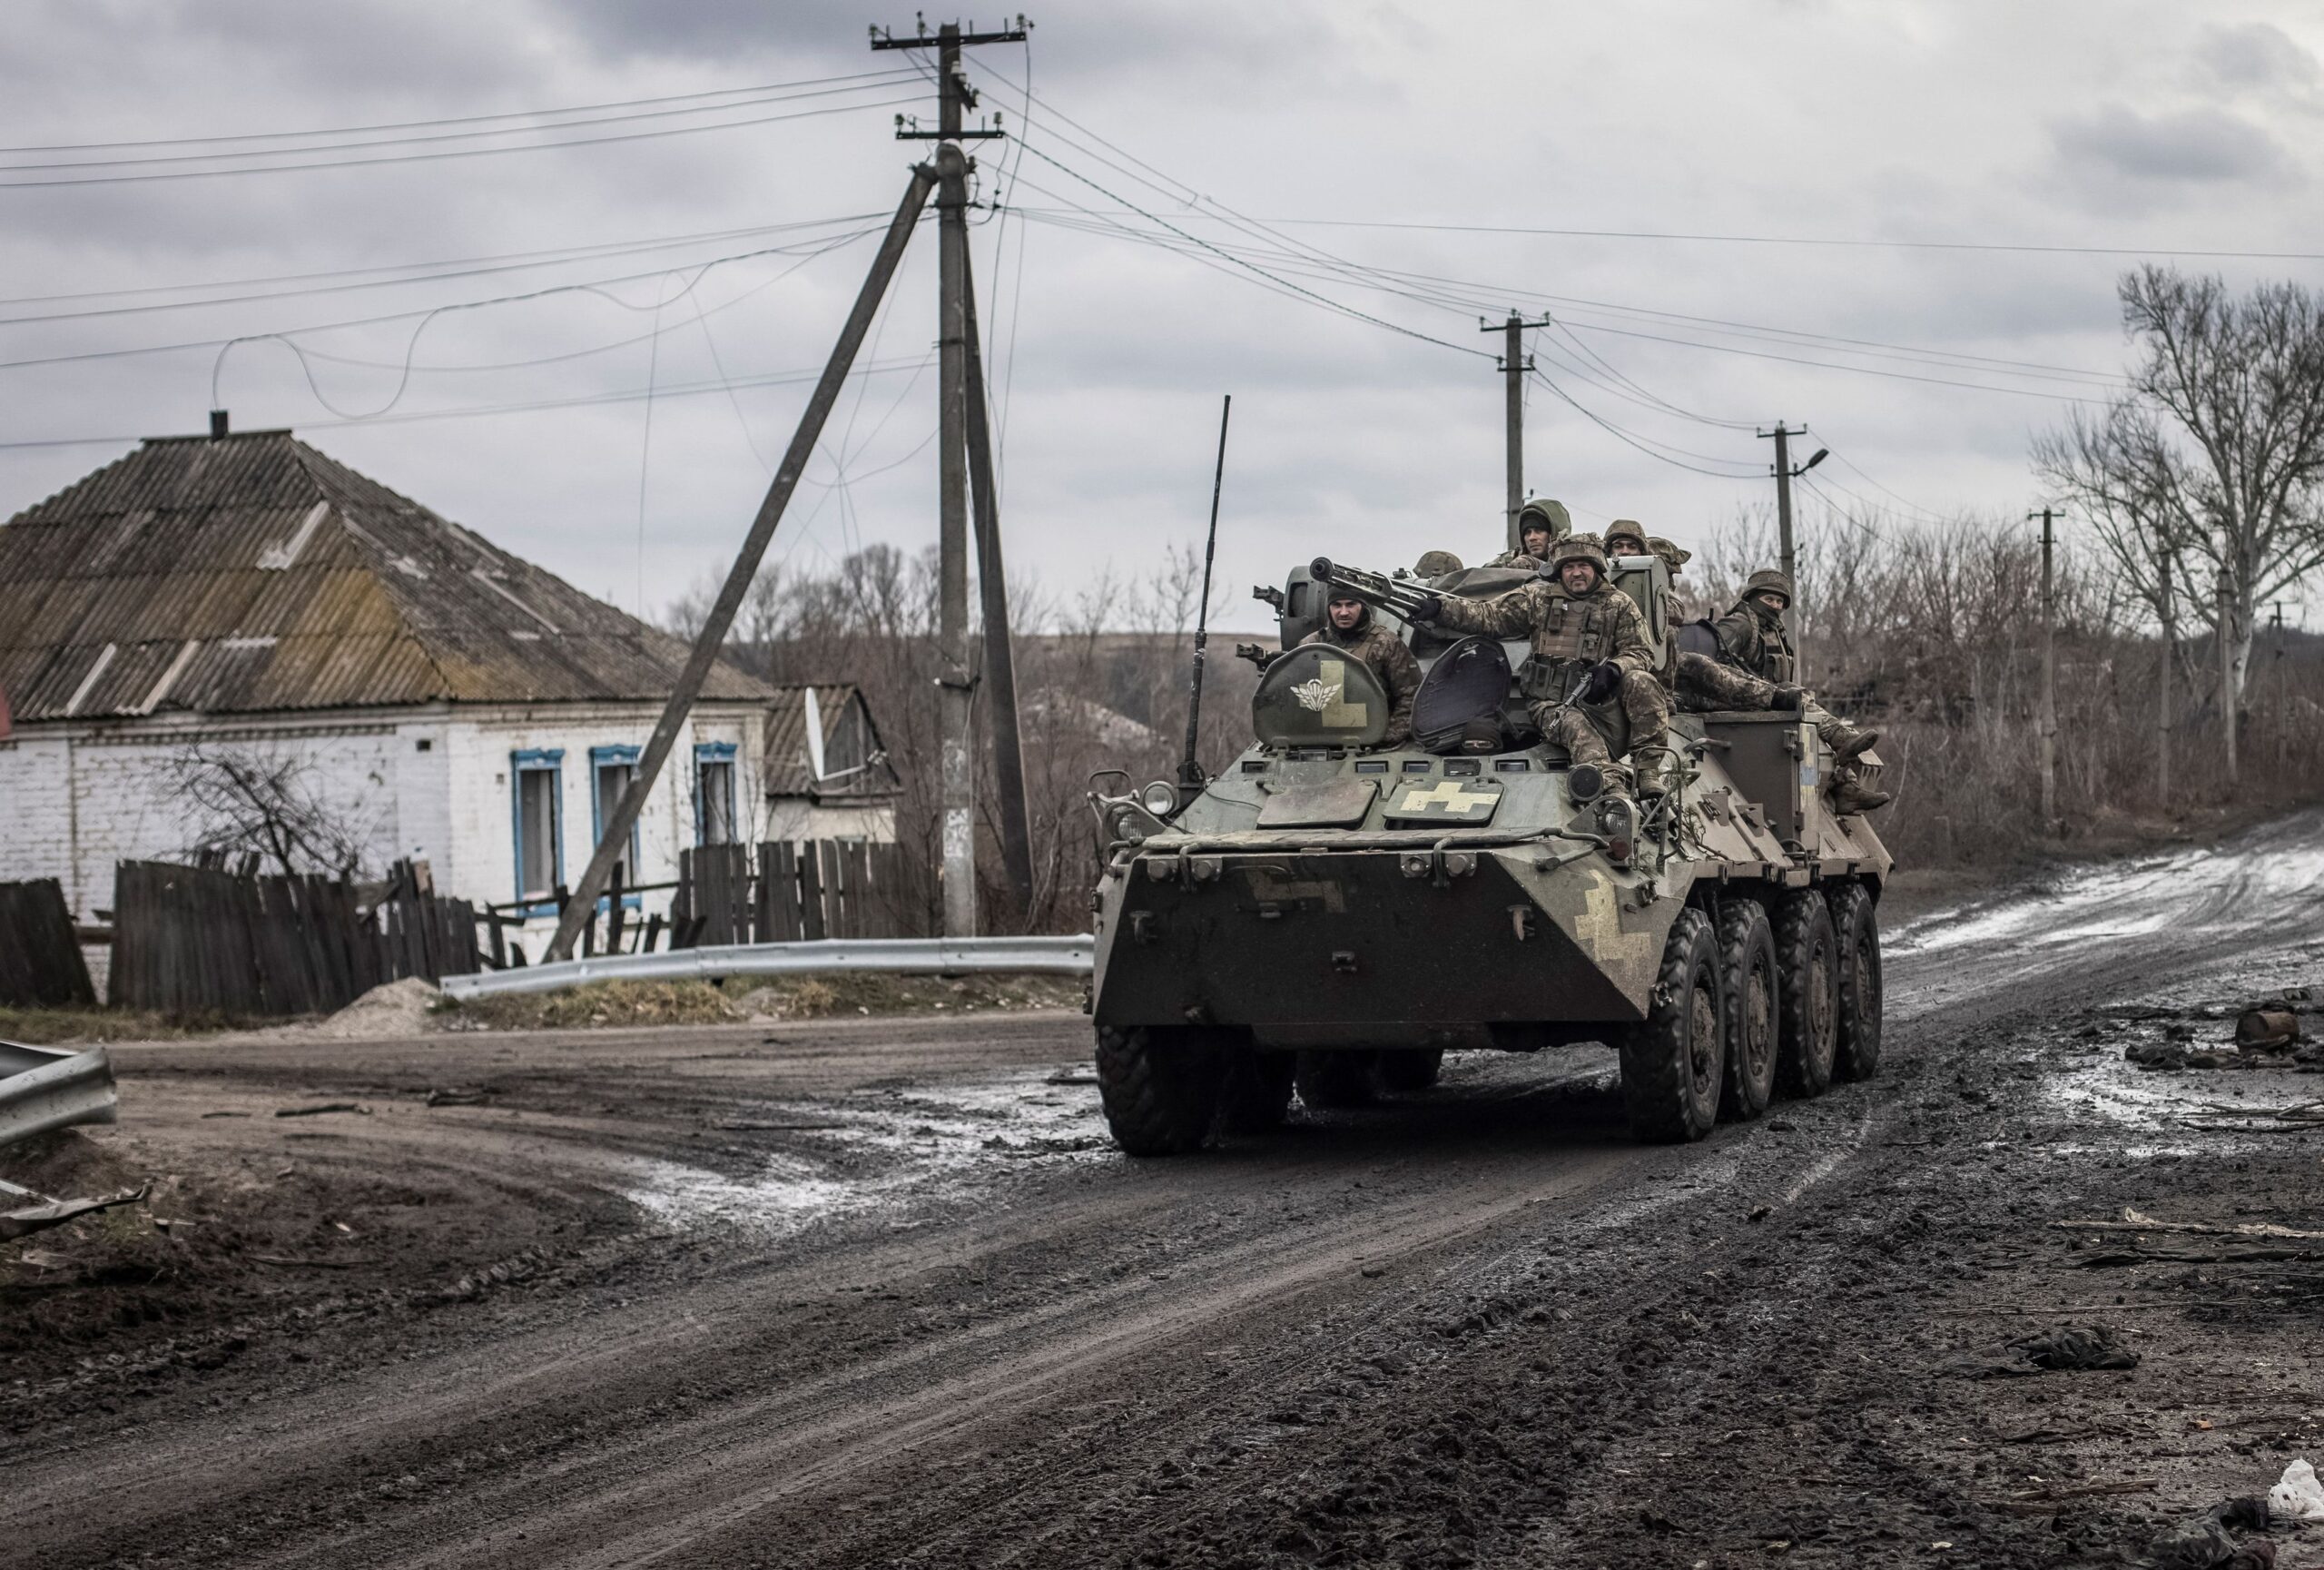 Tanks will help Kyiv break the deadlock. But its partners now face